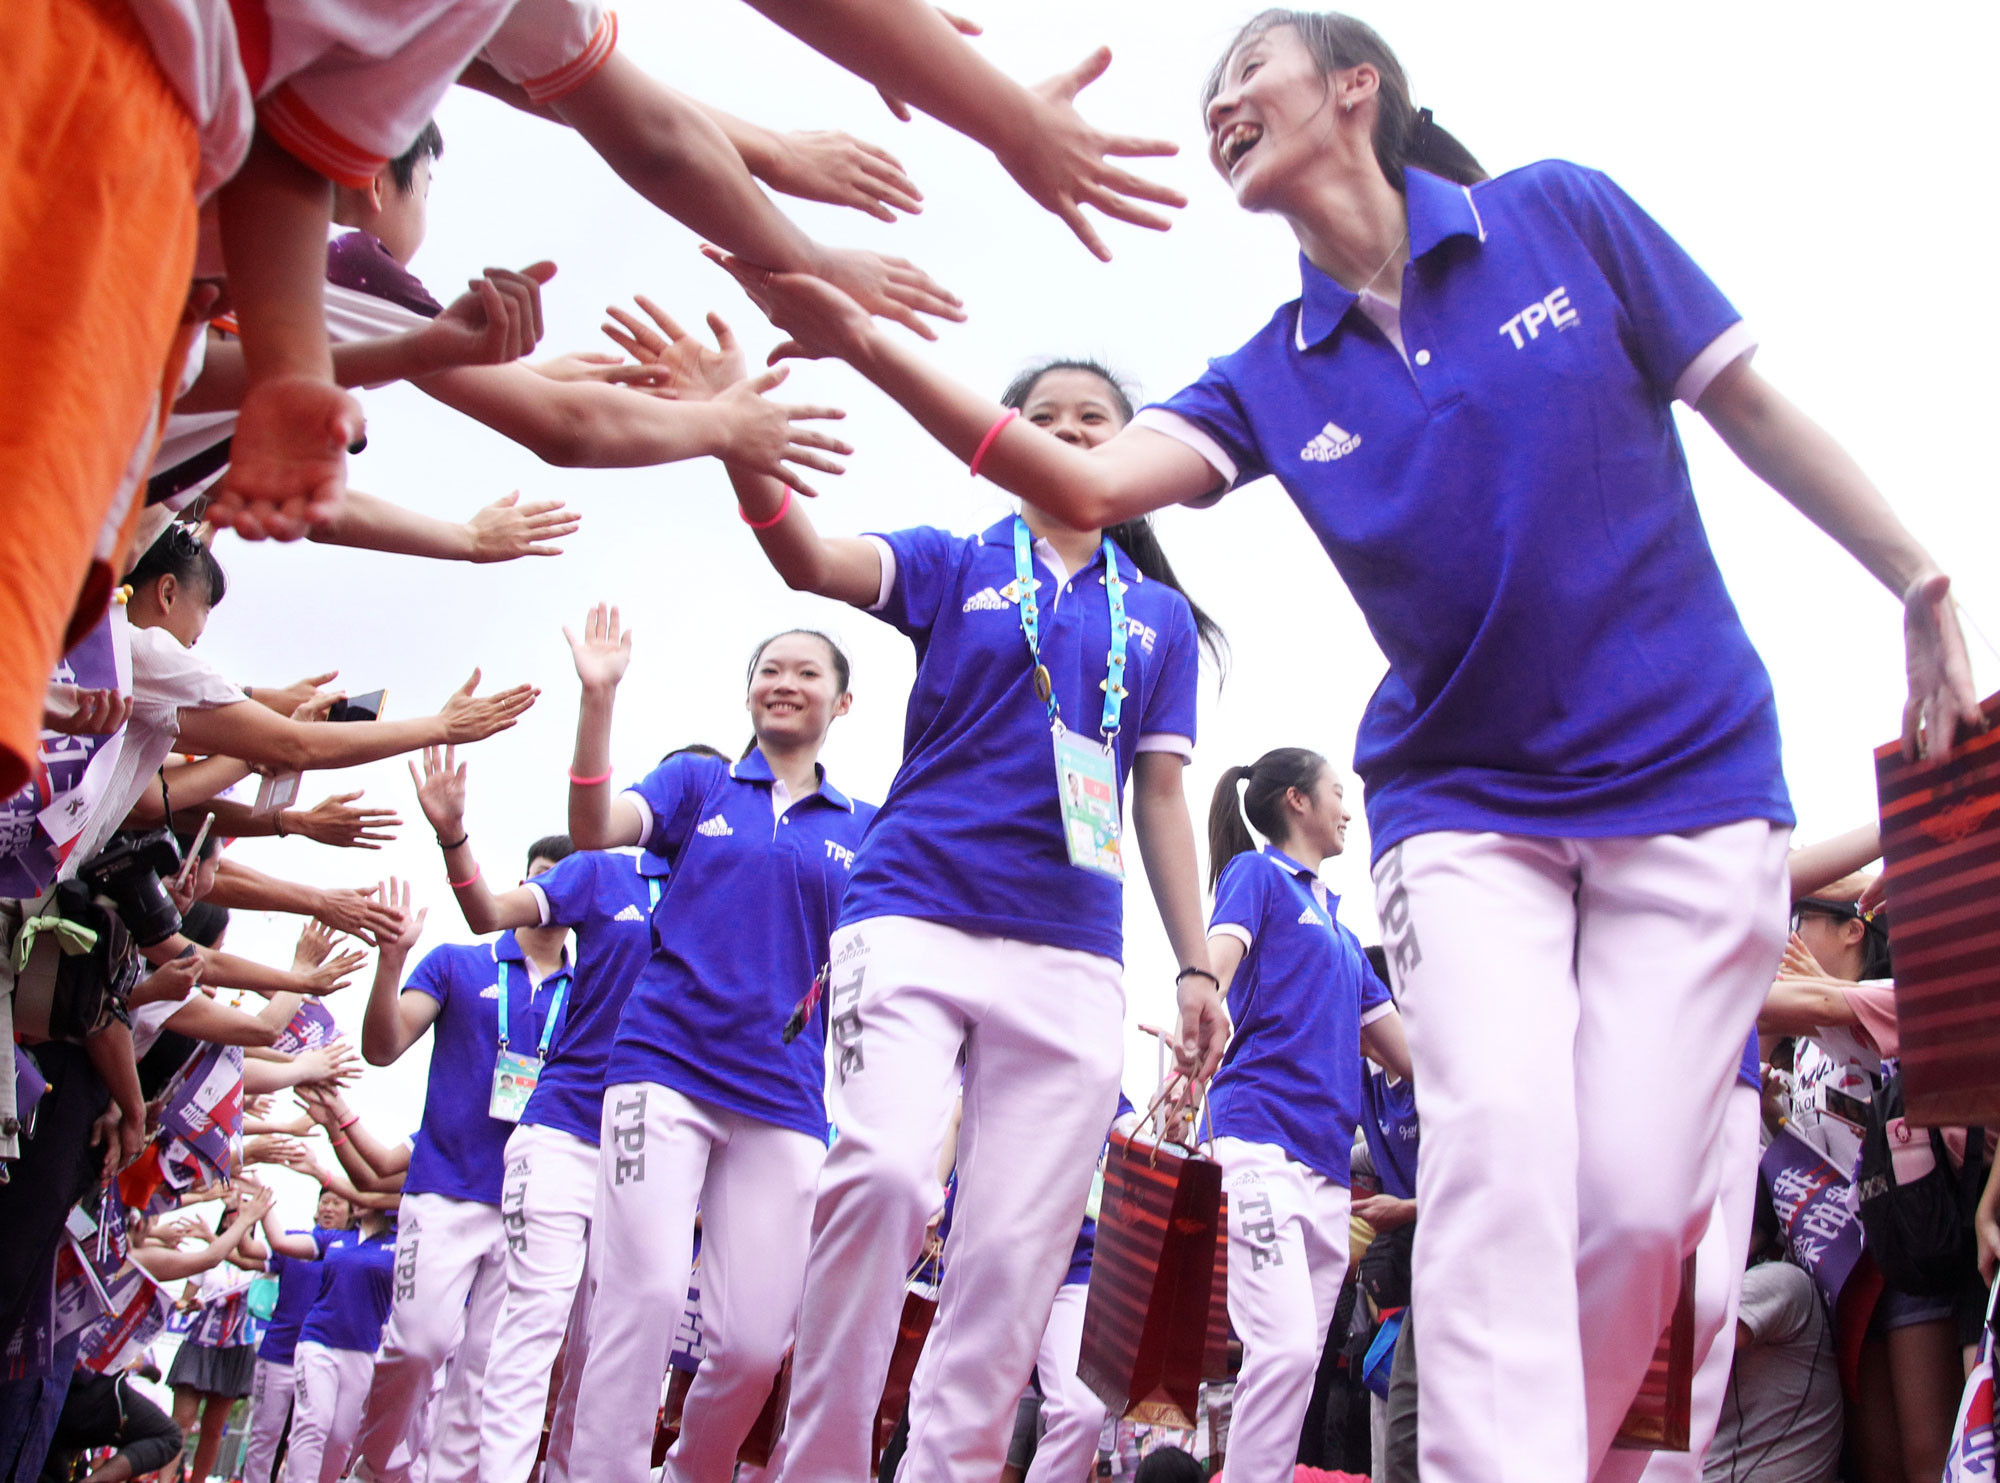 Taipei 2017 Summer Universiade generates economic impact of more than $150 million